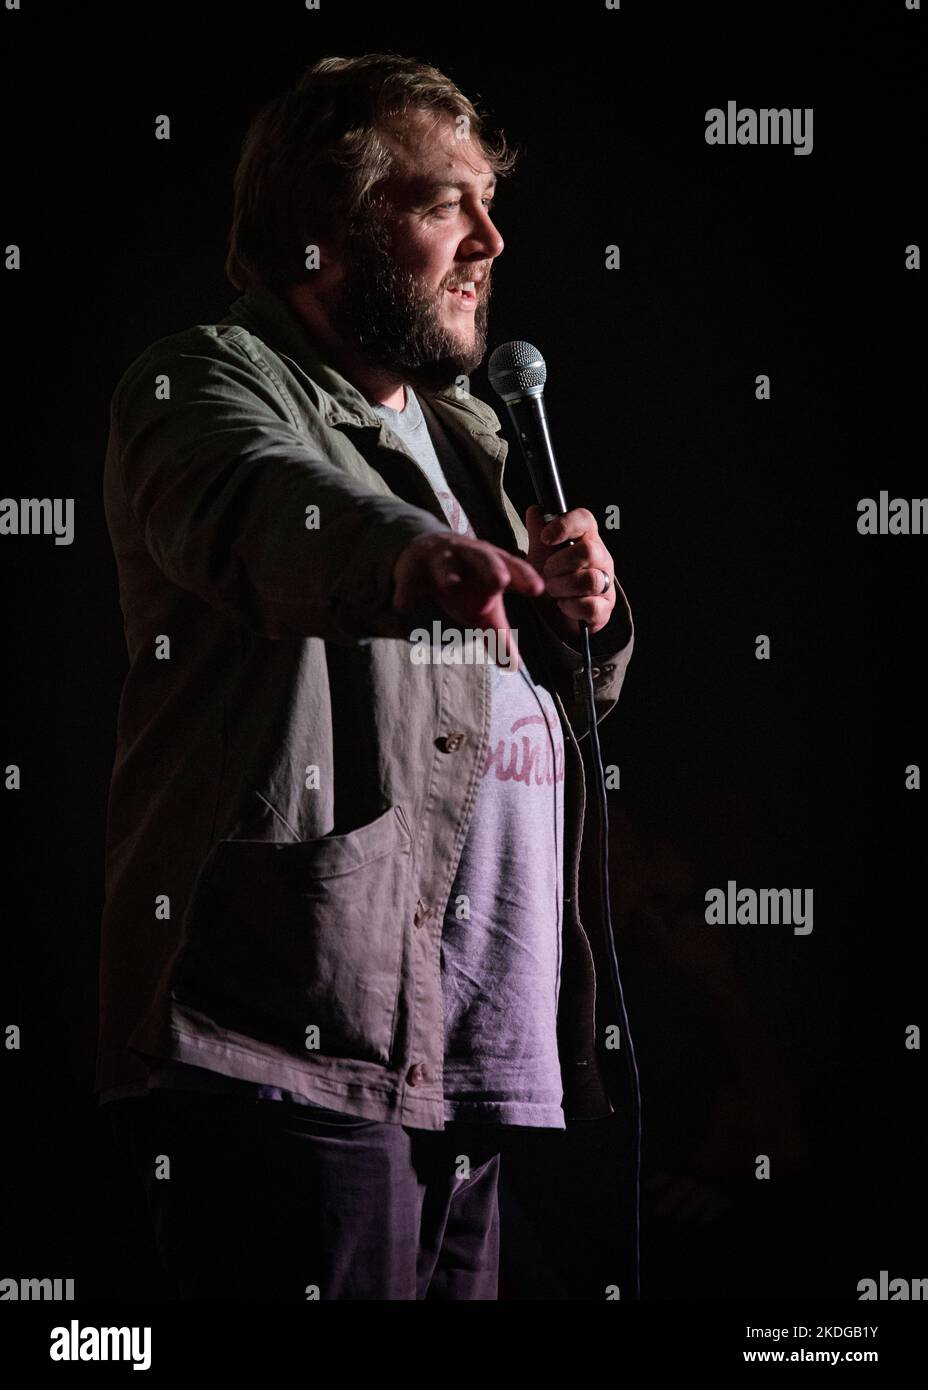 Tom Toal, Stand-Up Comedian, Joker Comedy Club, Southend, Essex © Clarissa Debenham / Alamy Stock Photo